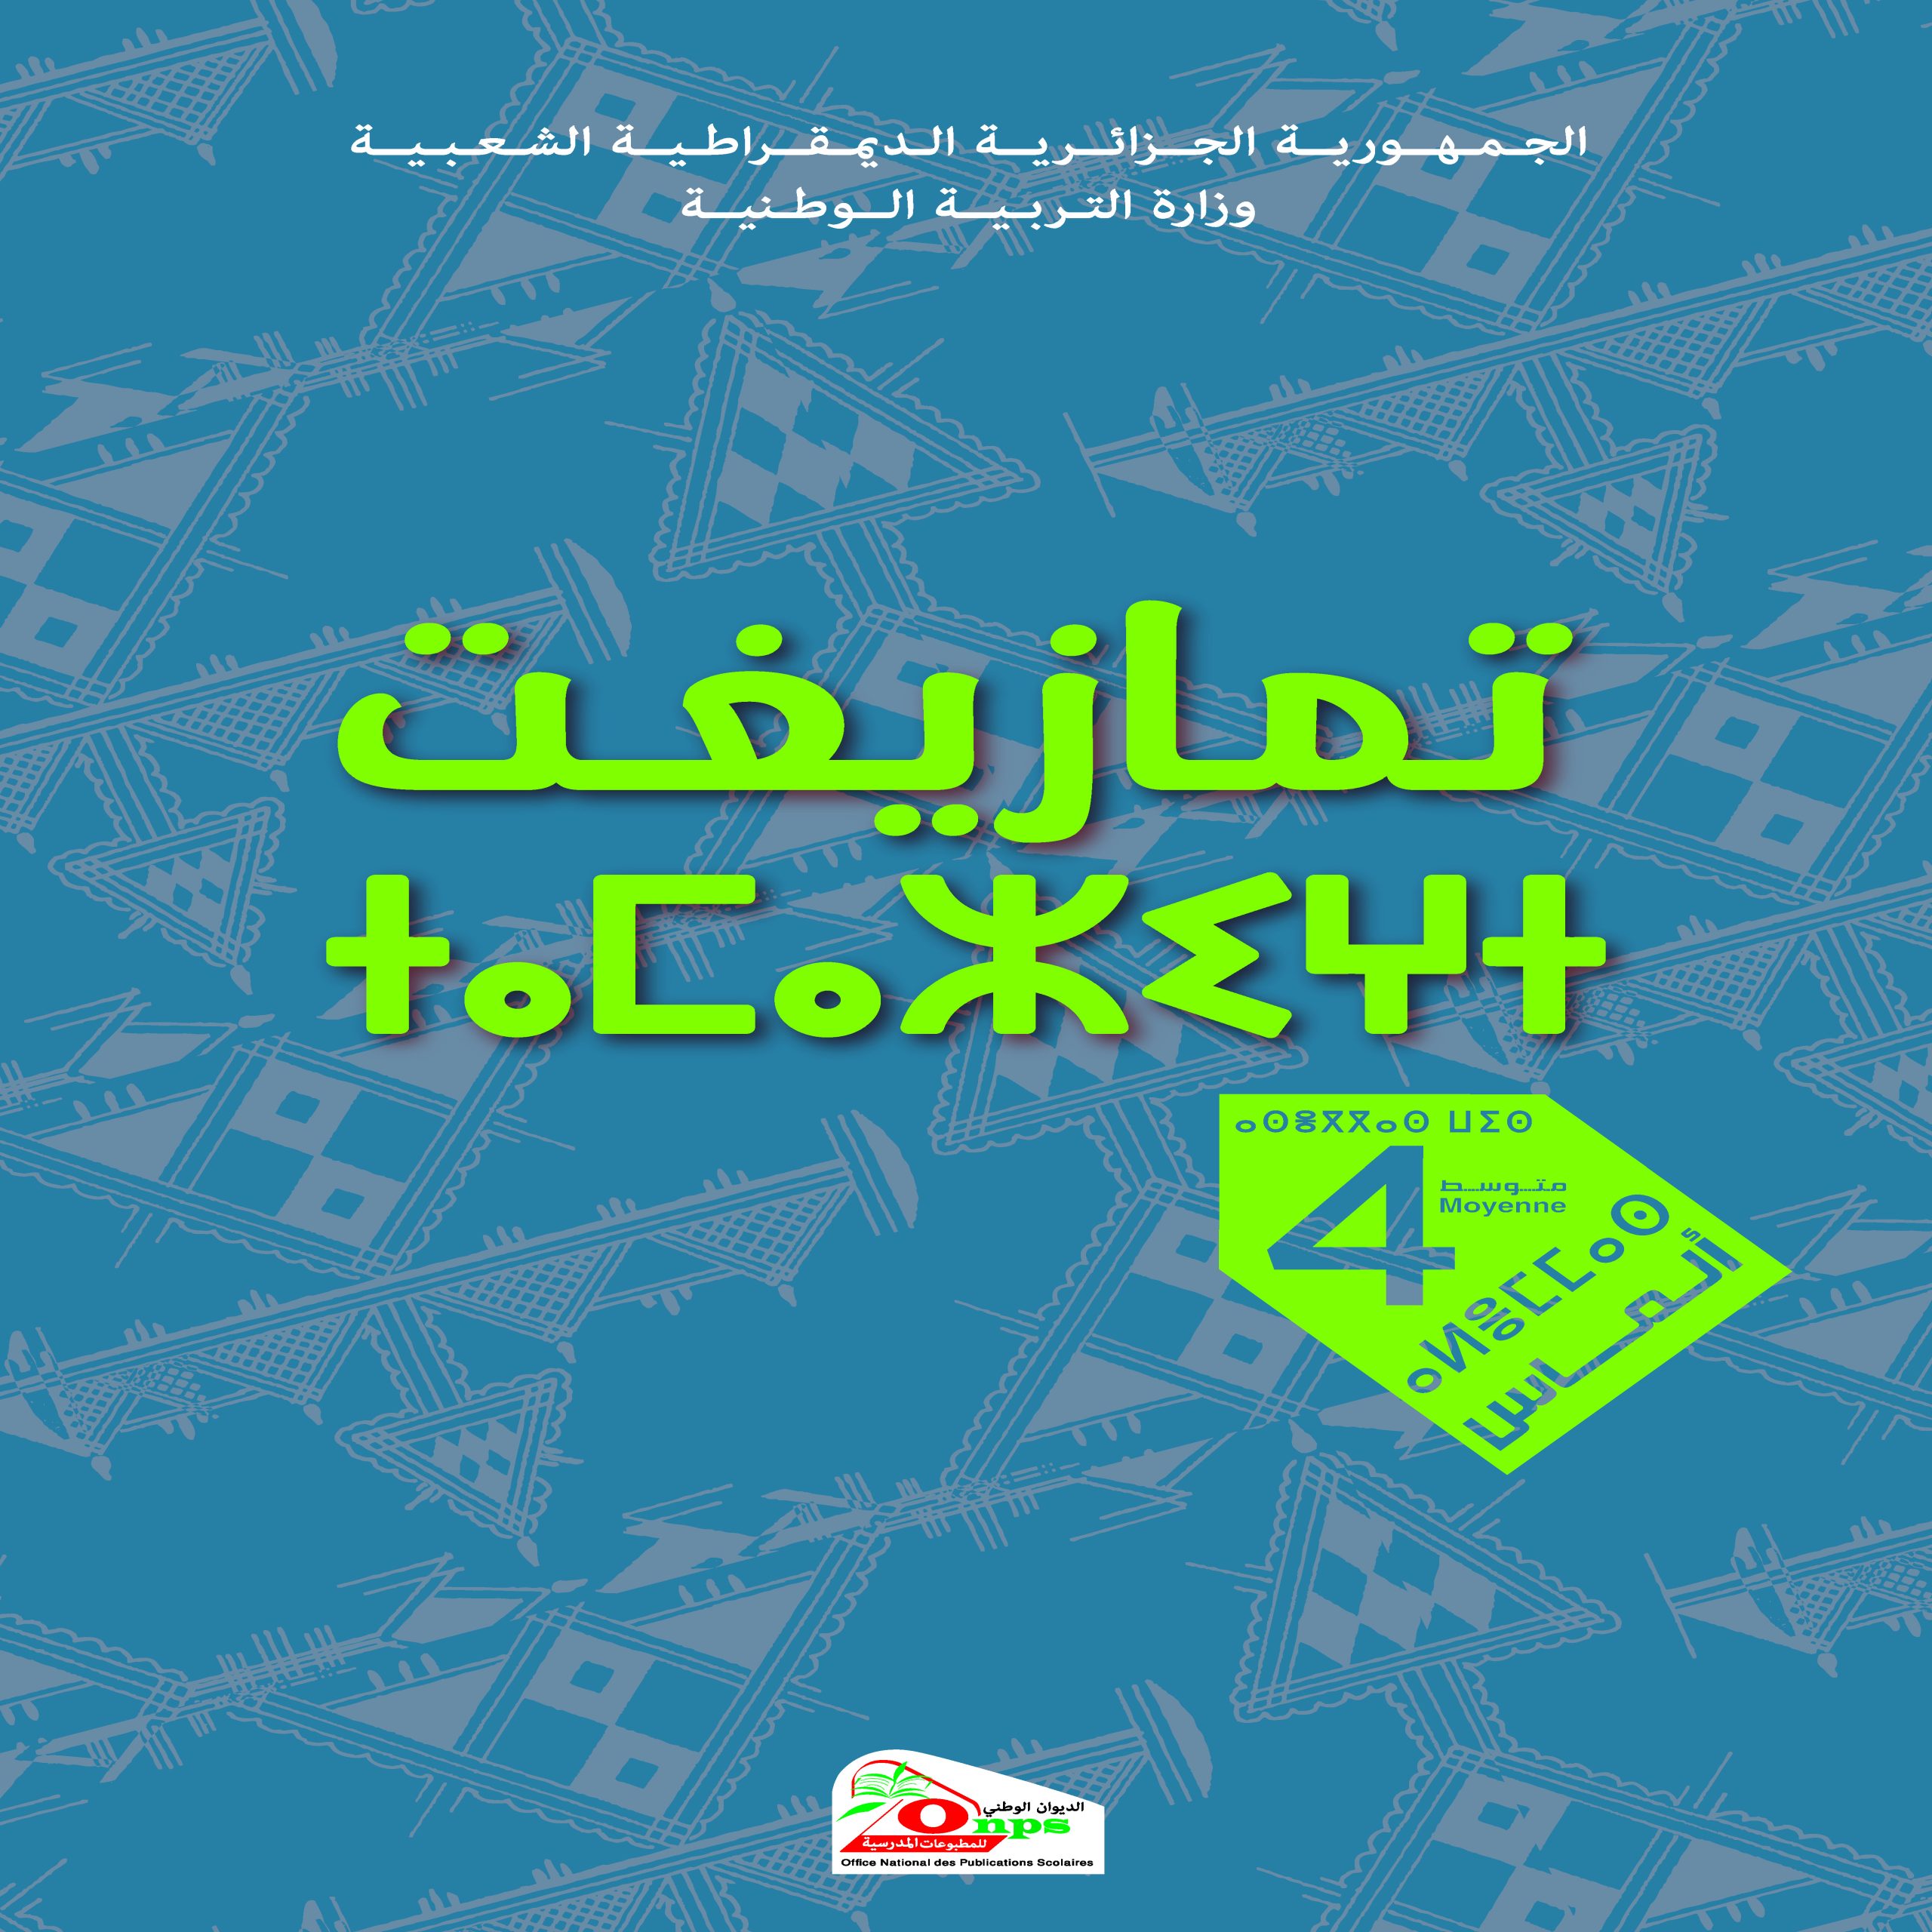 MS 1011 Couverture Tamazight 4AM 2022 2023 scaled - الديوان الوطني للمطبوعات المدرسية